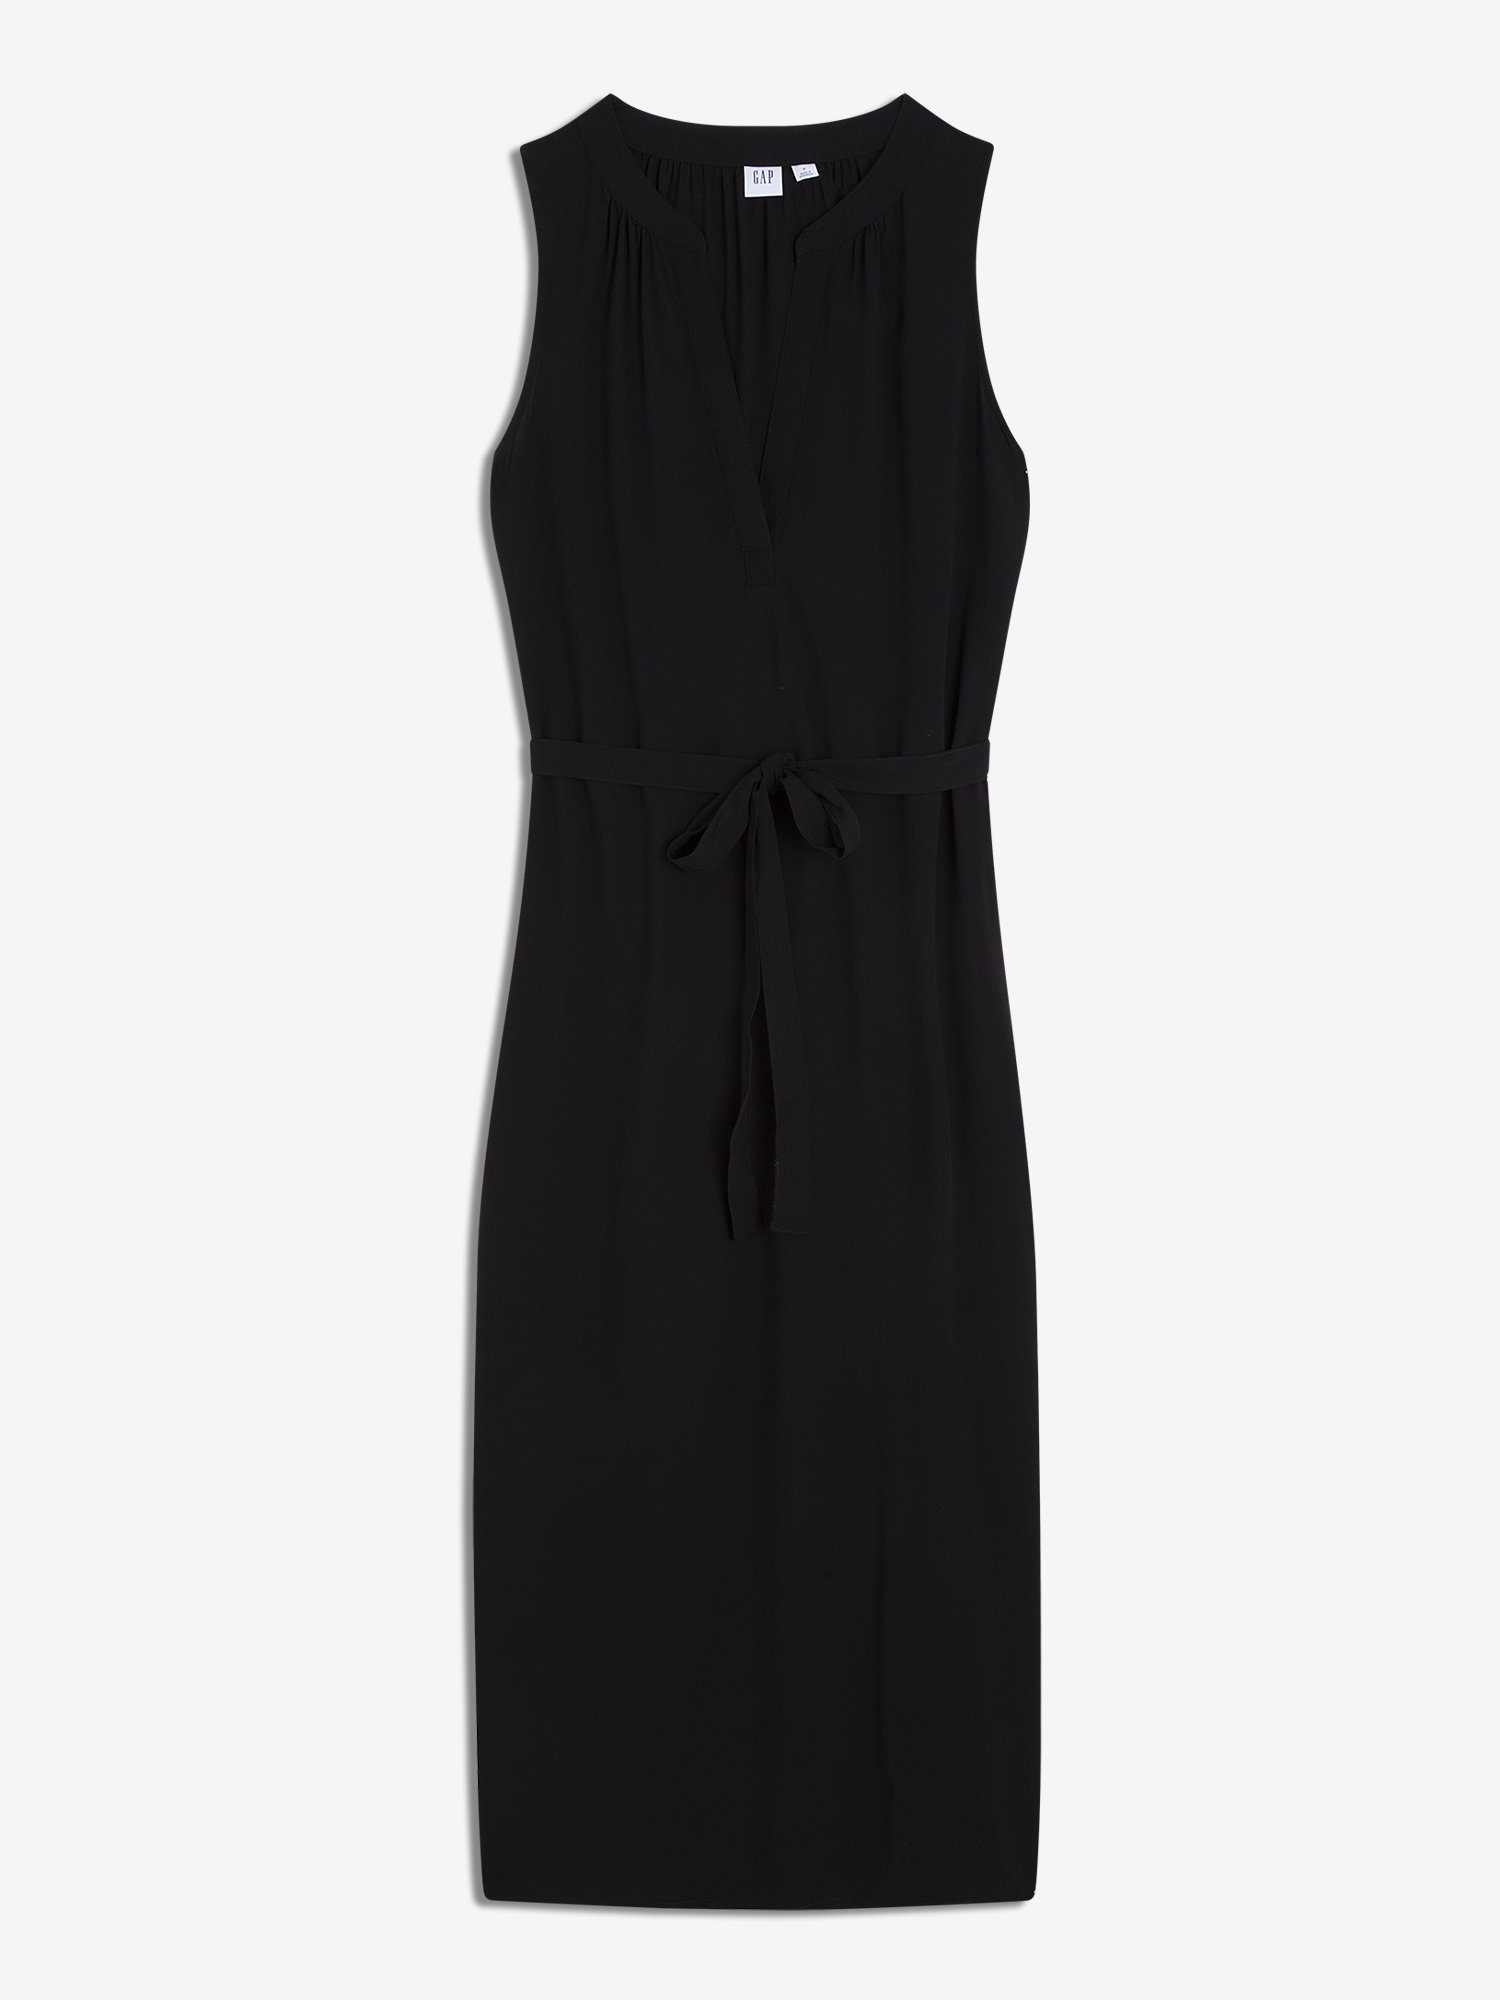 Kadın Kolsuz Midi Elbise product image